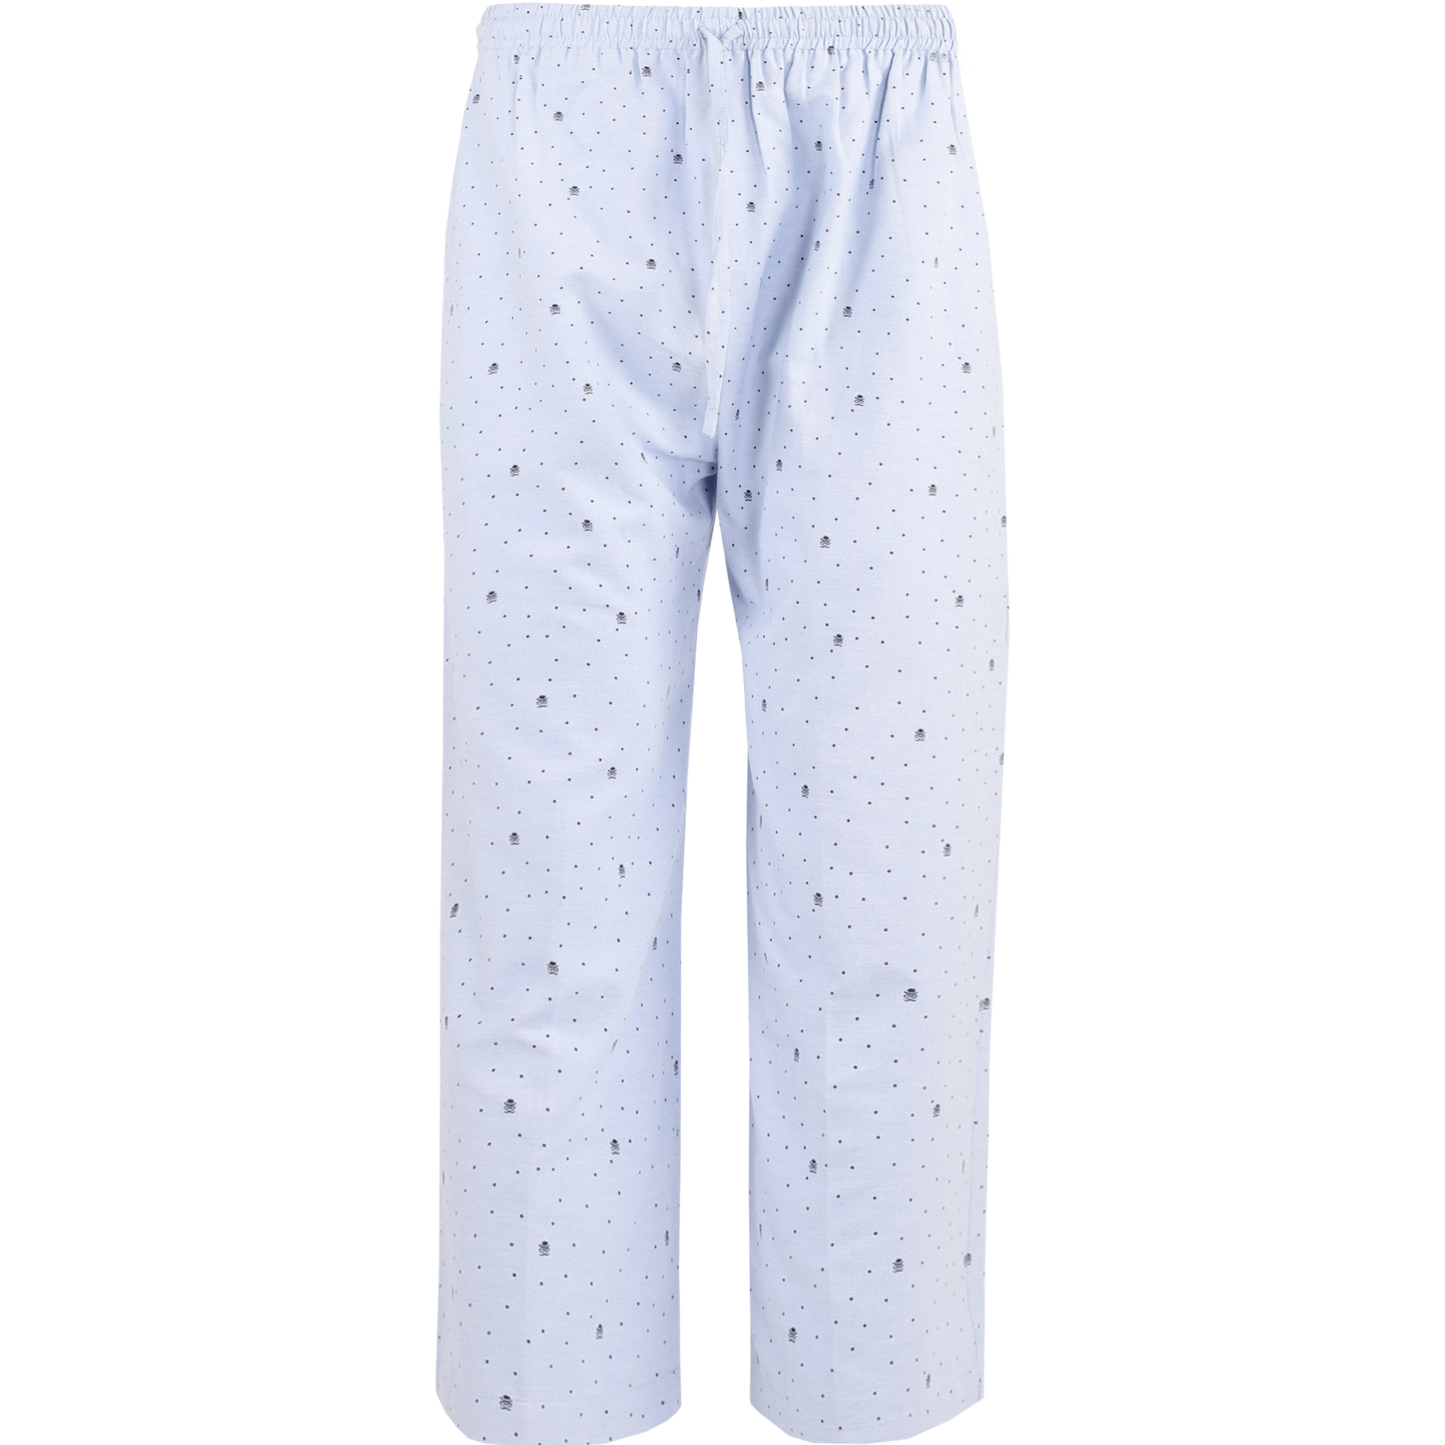 Blue Inpatient Pyjama Pants with Bowler Hat Print — Hospital & Nursing Home uniforms by CYC